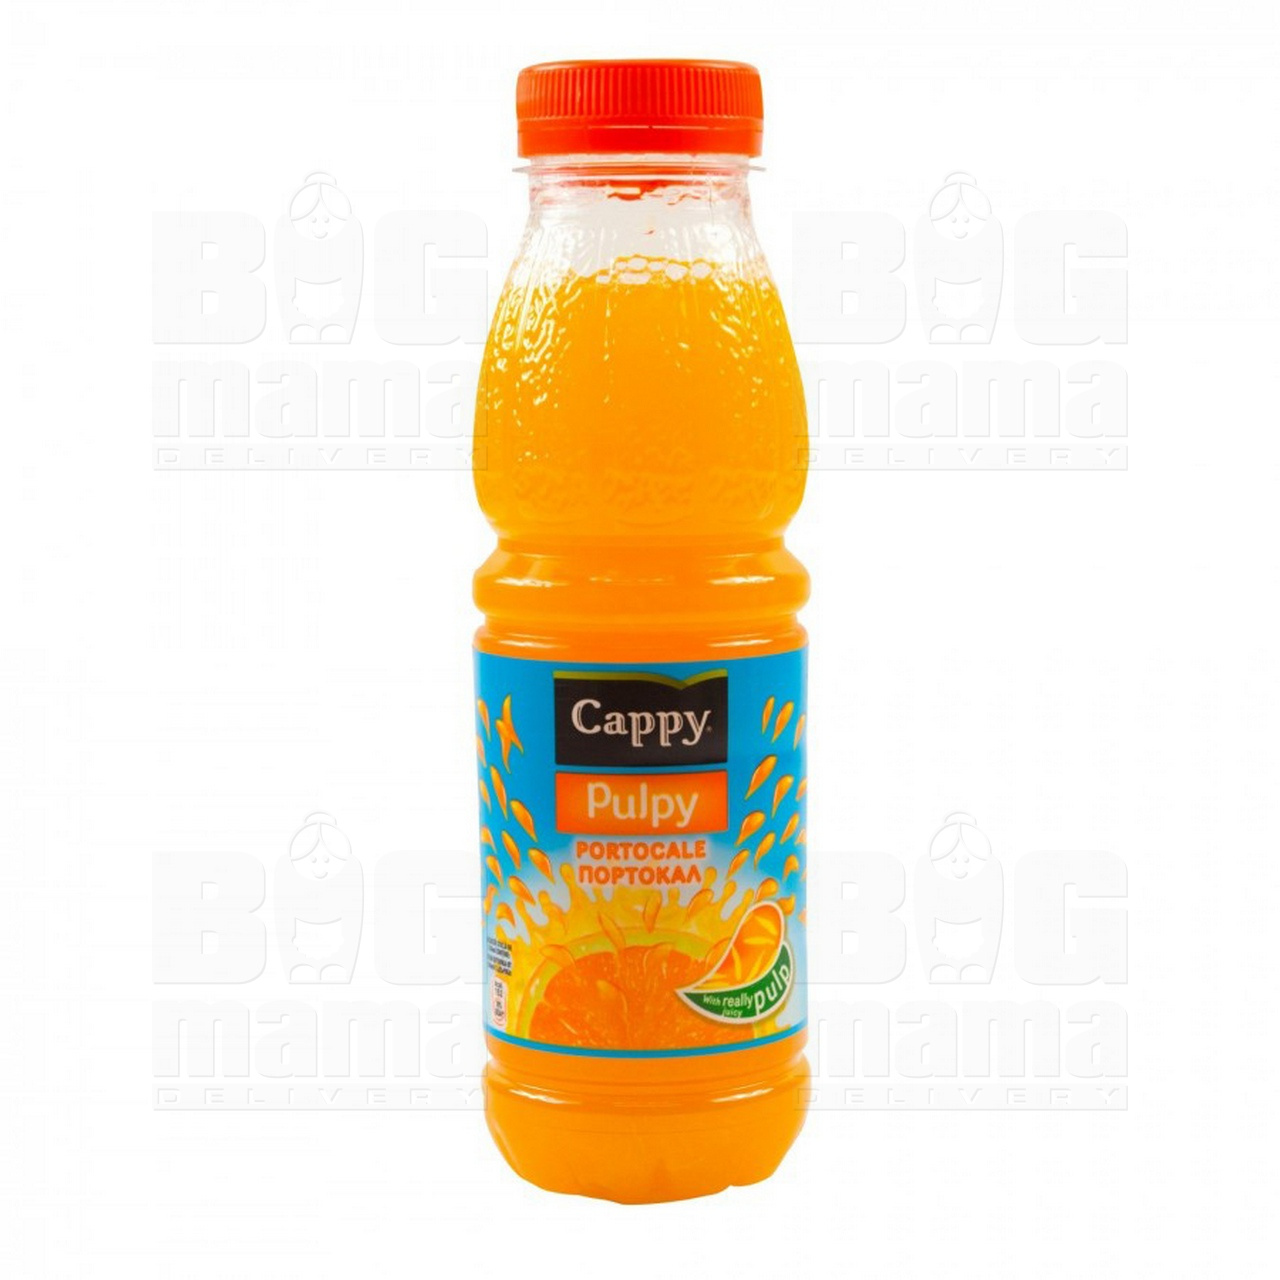 Product #233 image - Cappy Pulpy Orange 0,33l